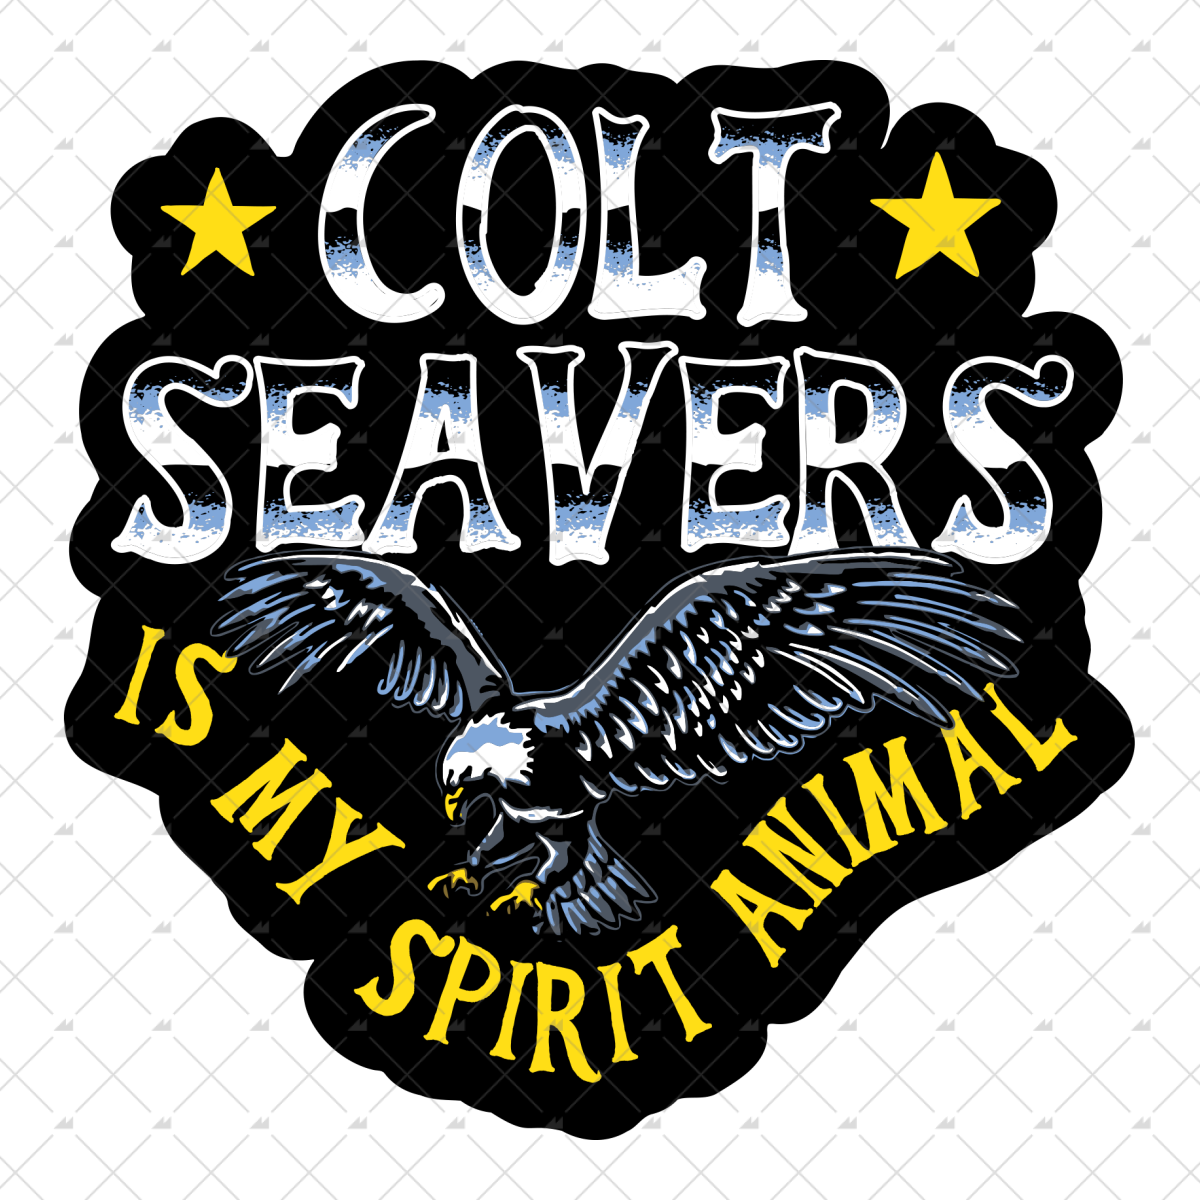 Colt Seaver is My Spirit Animal - Sticker